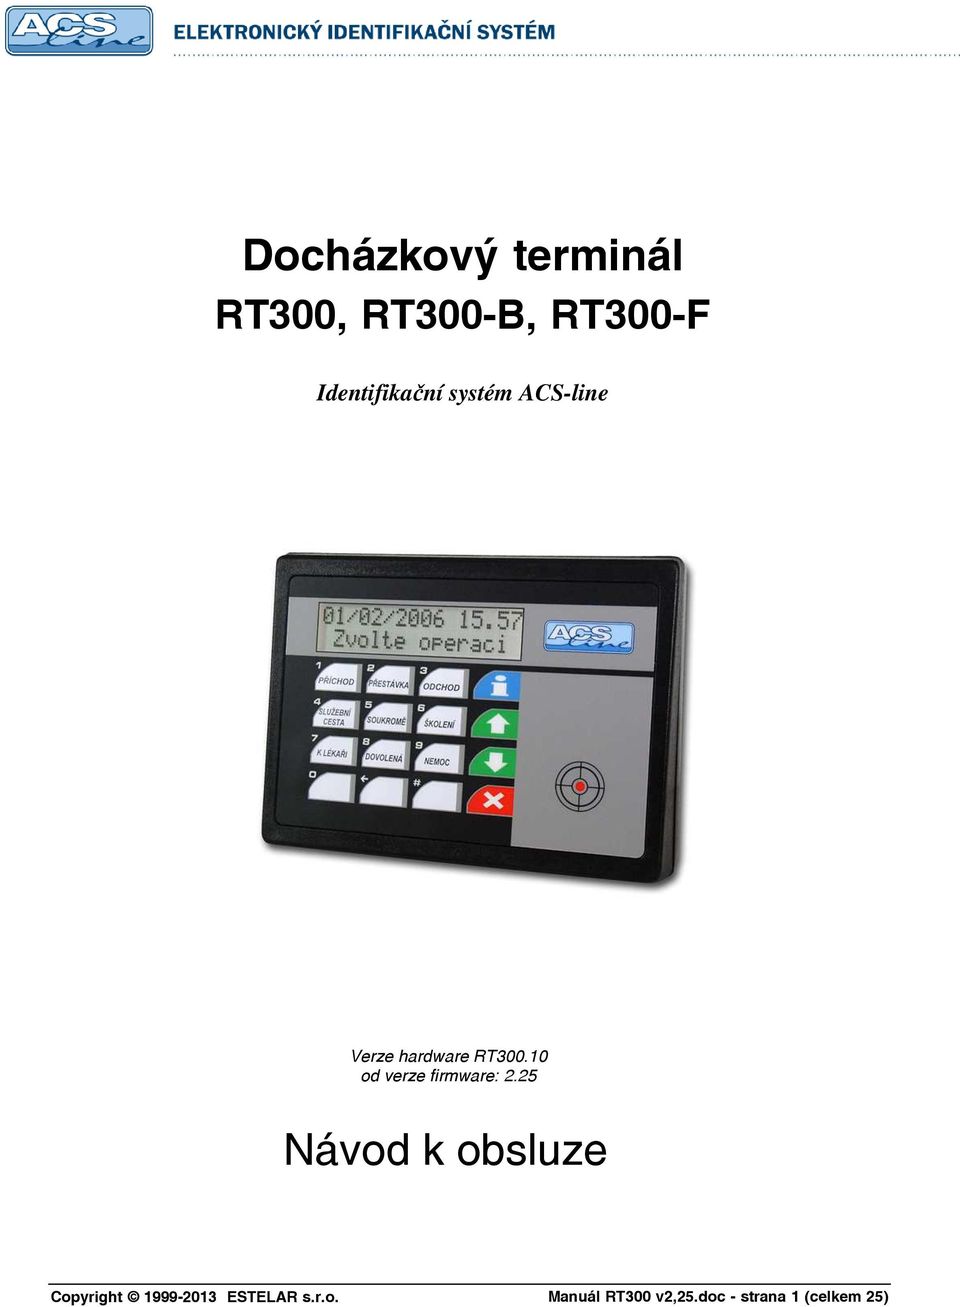 RT300.10 od verze firmware: 2.